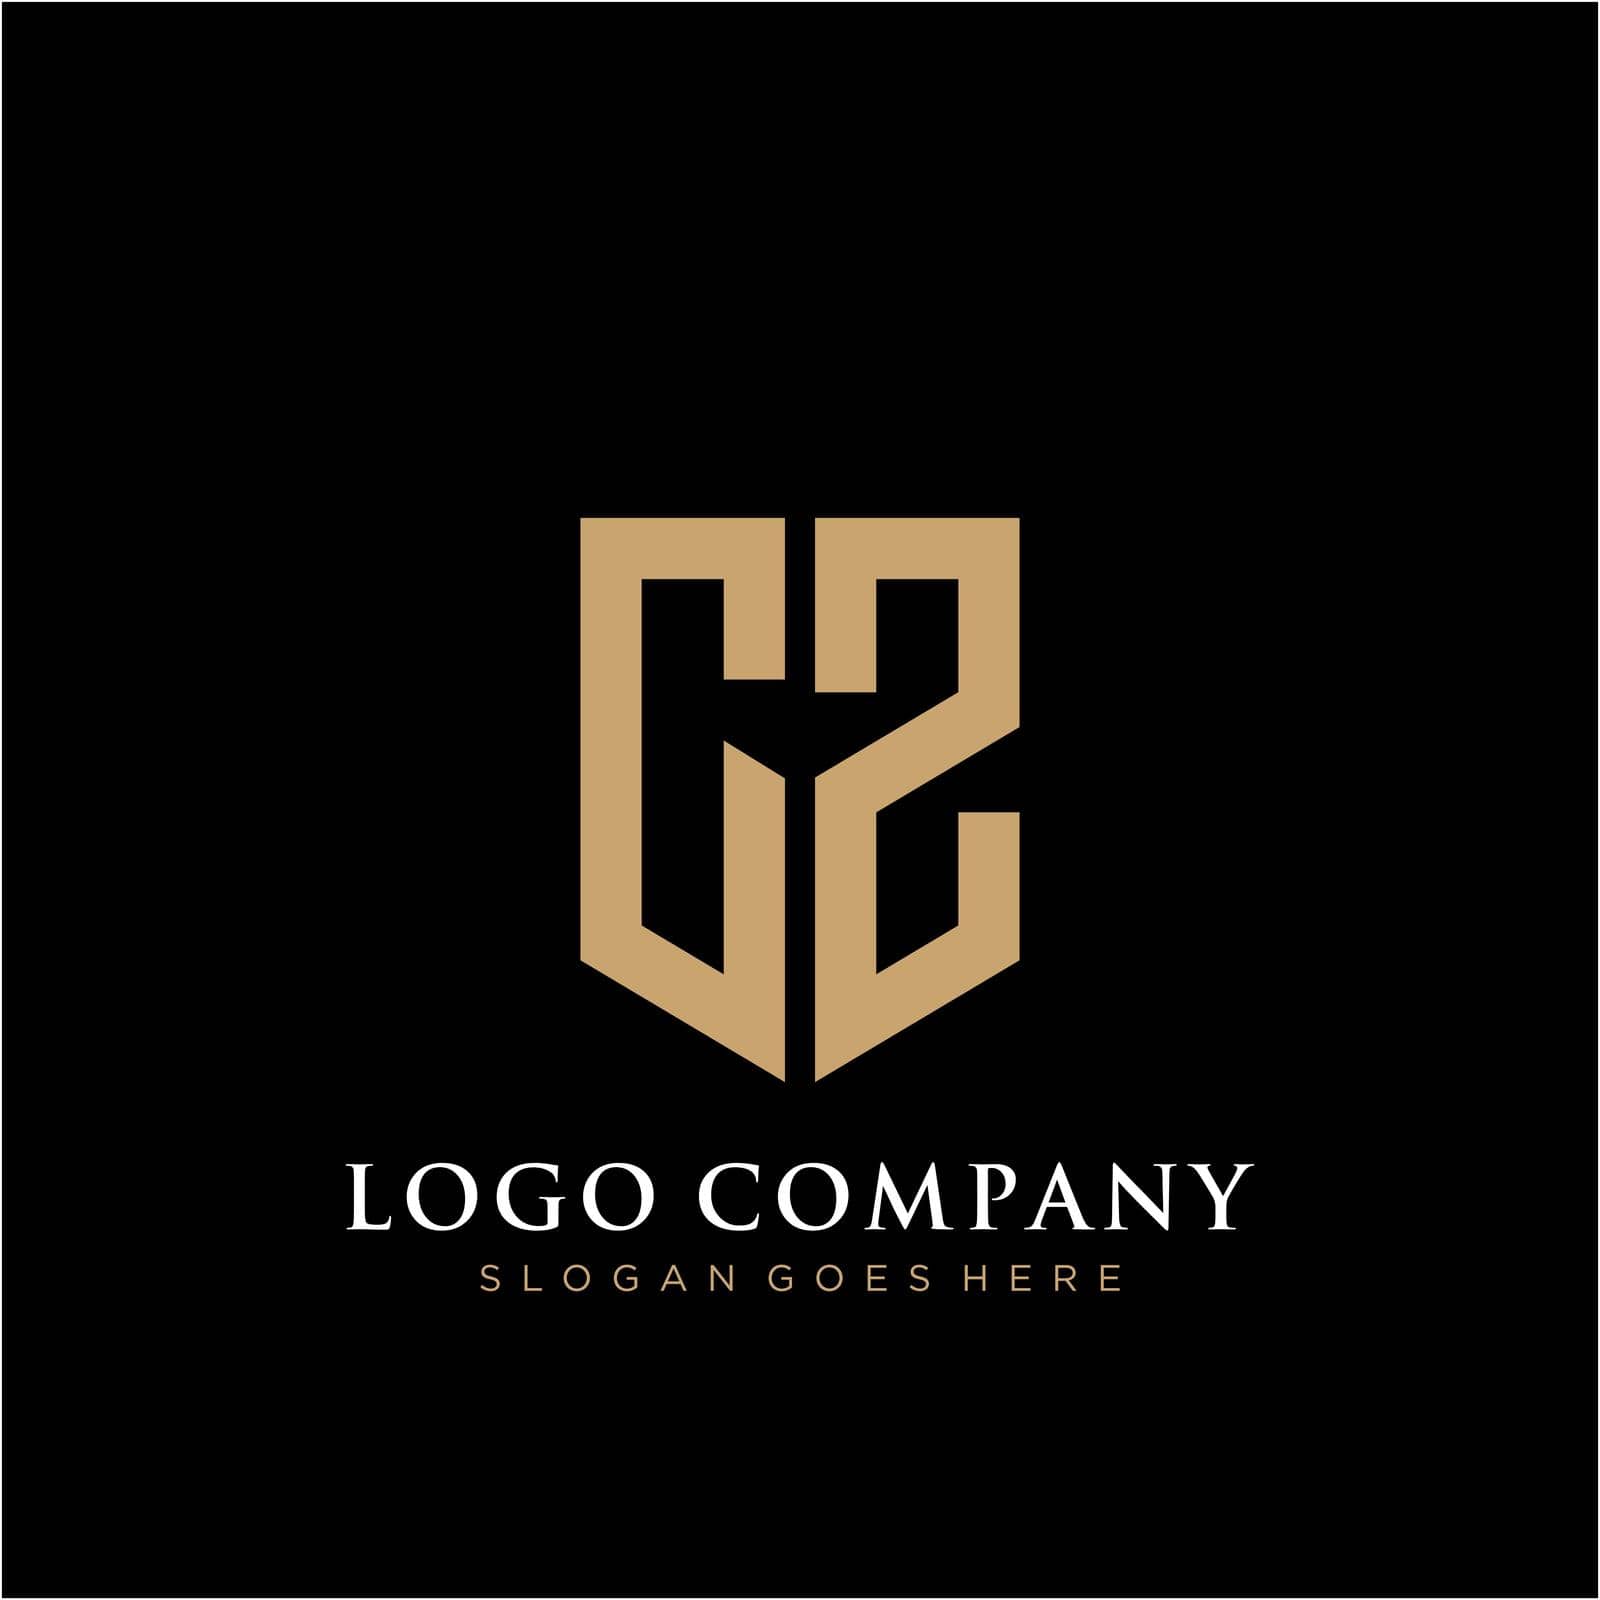 CZ Letter logo icon design template elements by liaanniesatul